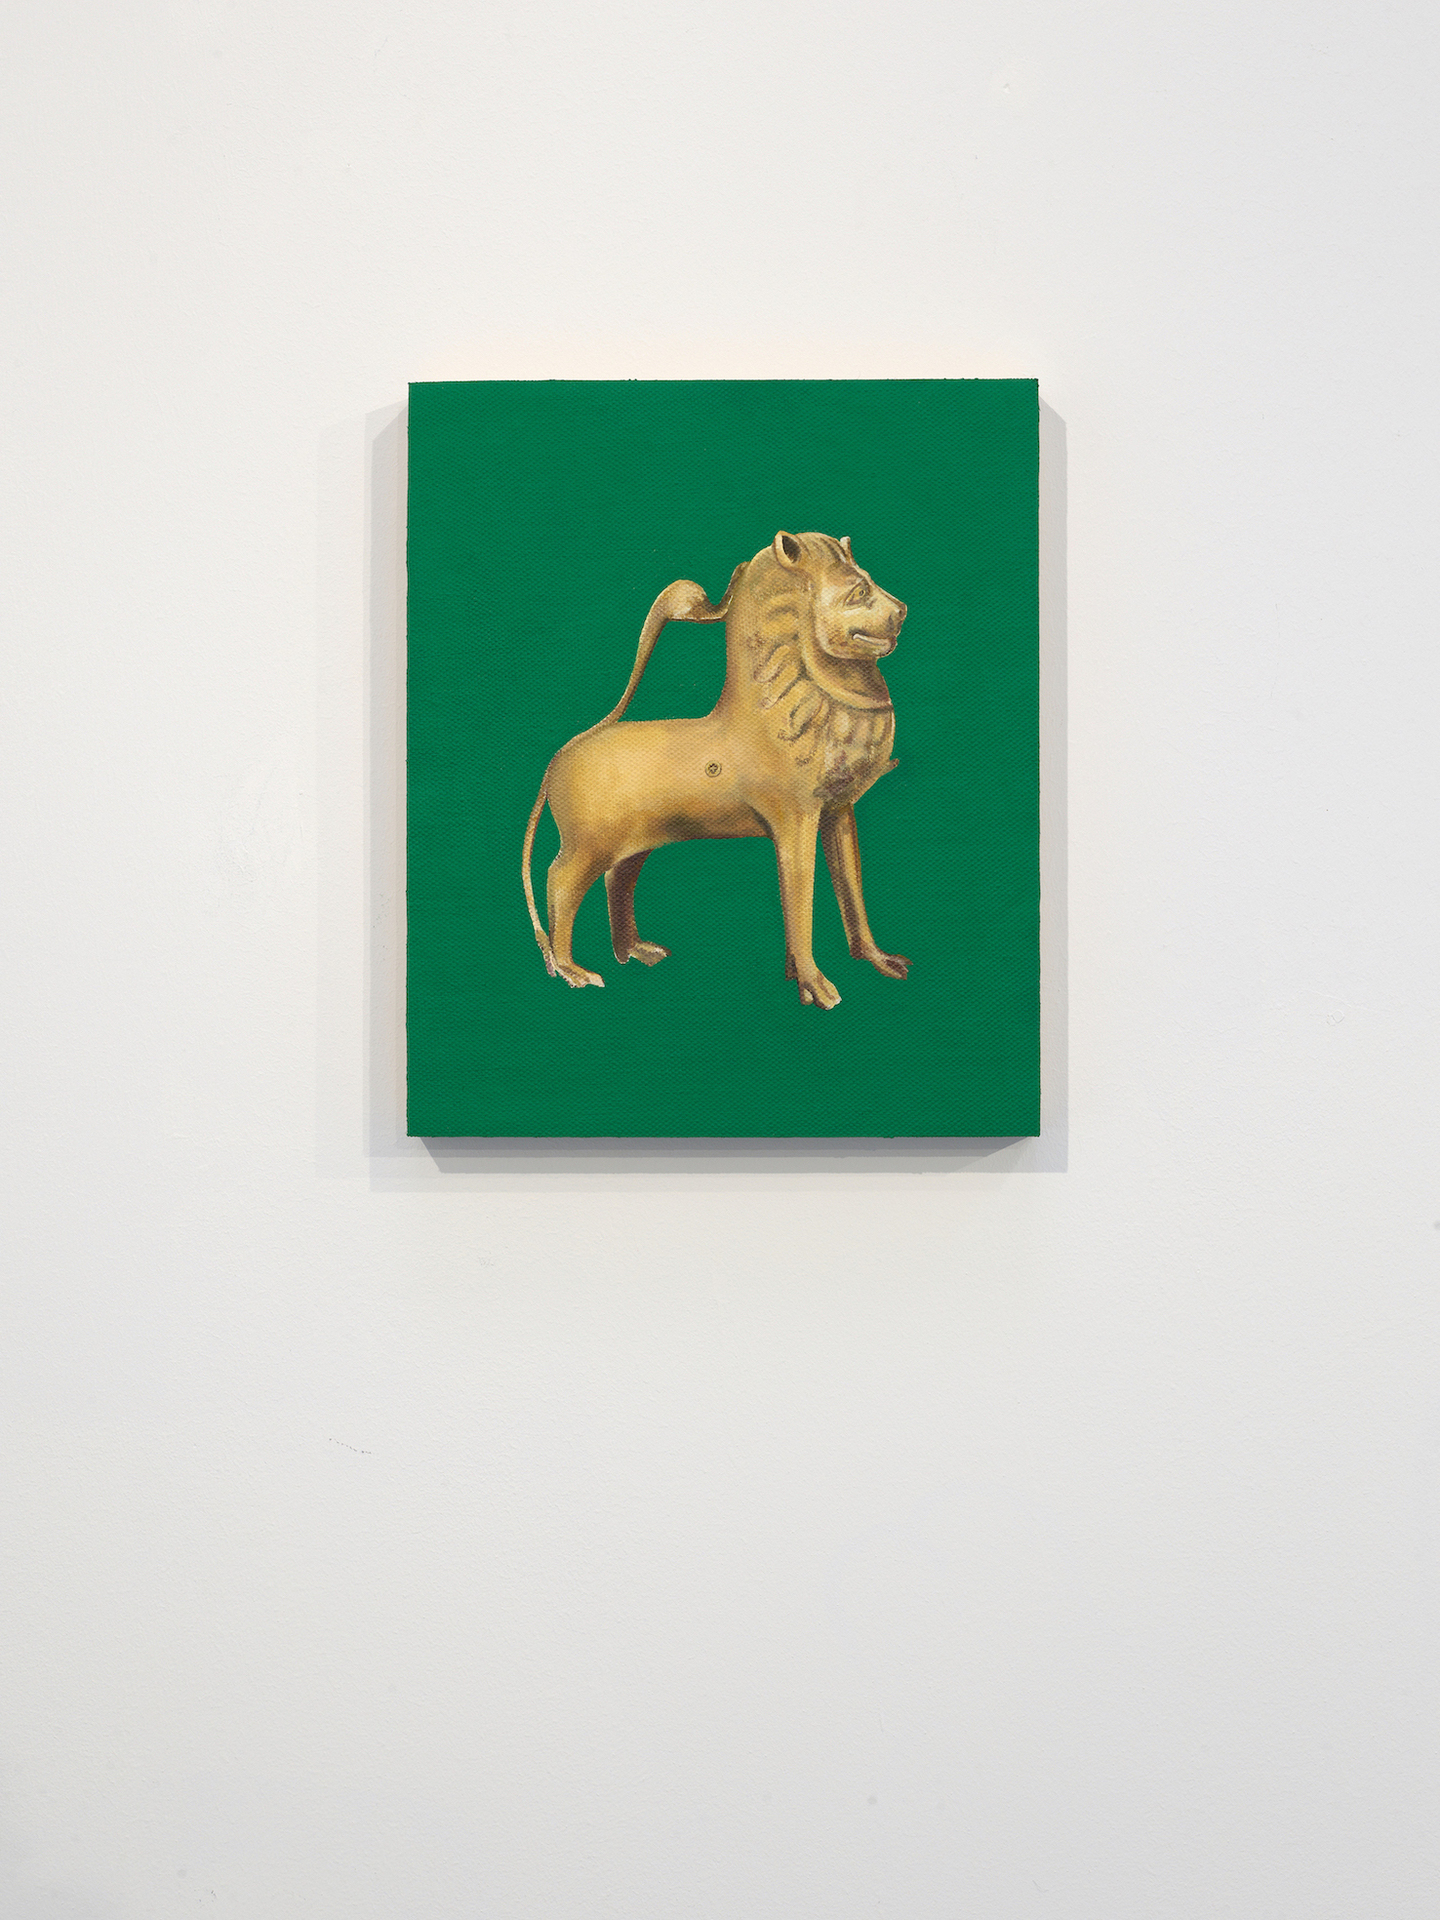 Ye Olde Gold Lion, oil on canvas, 30x25cm, 2022